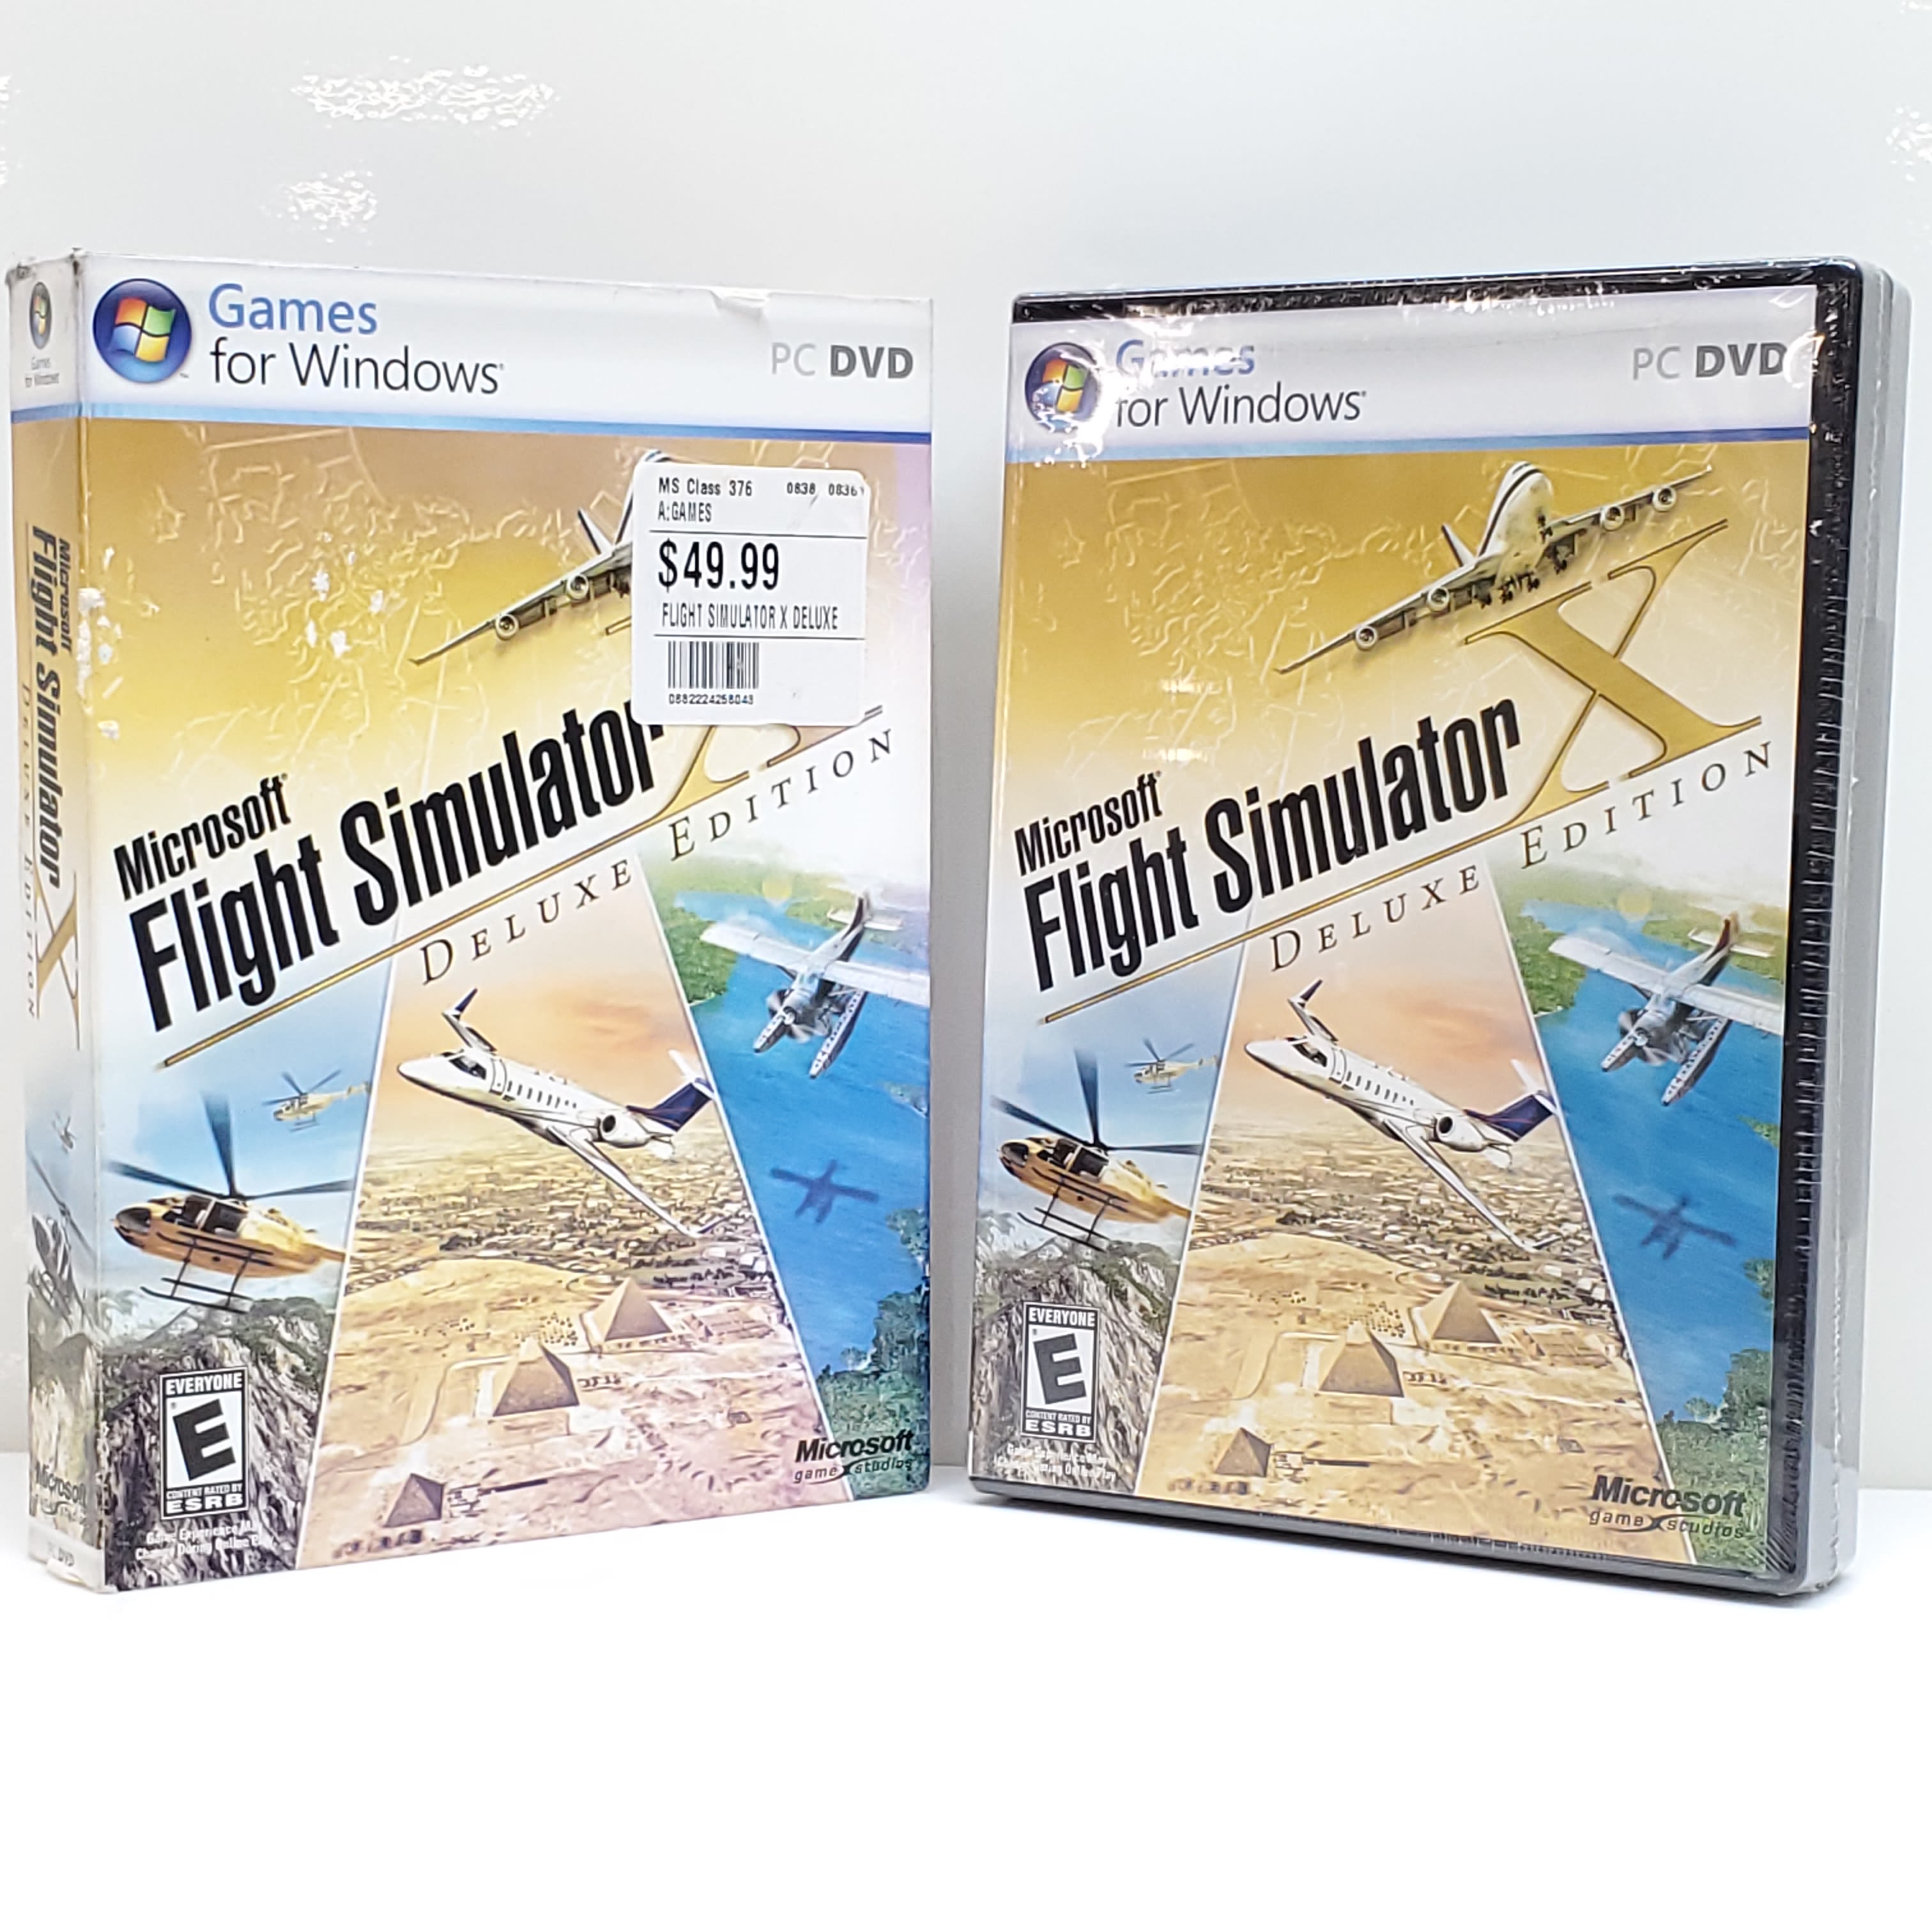 WORLD OF SIMULATORS DELUXE EDITION (PC DVD) 10 DIFF SIMULATION